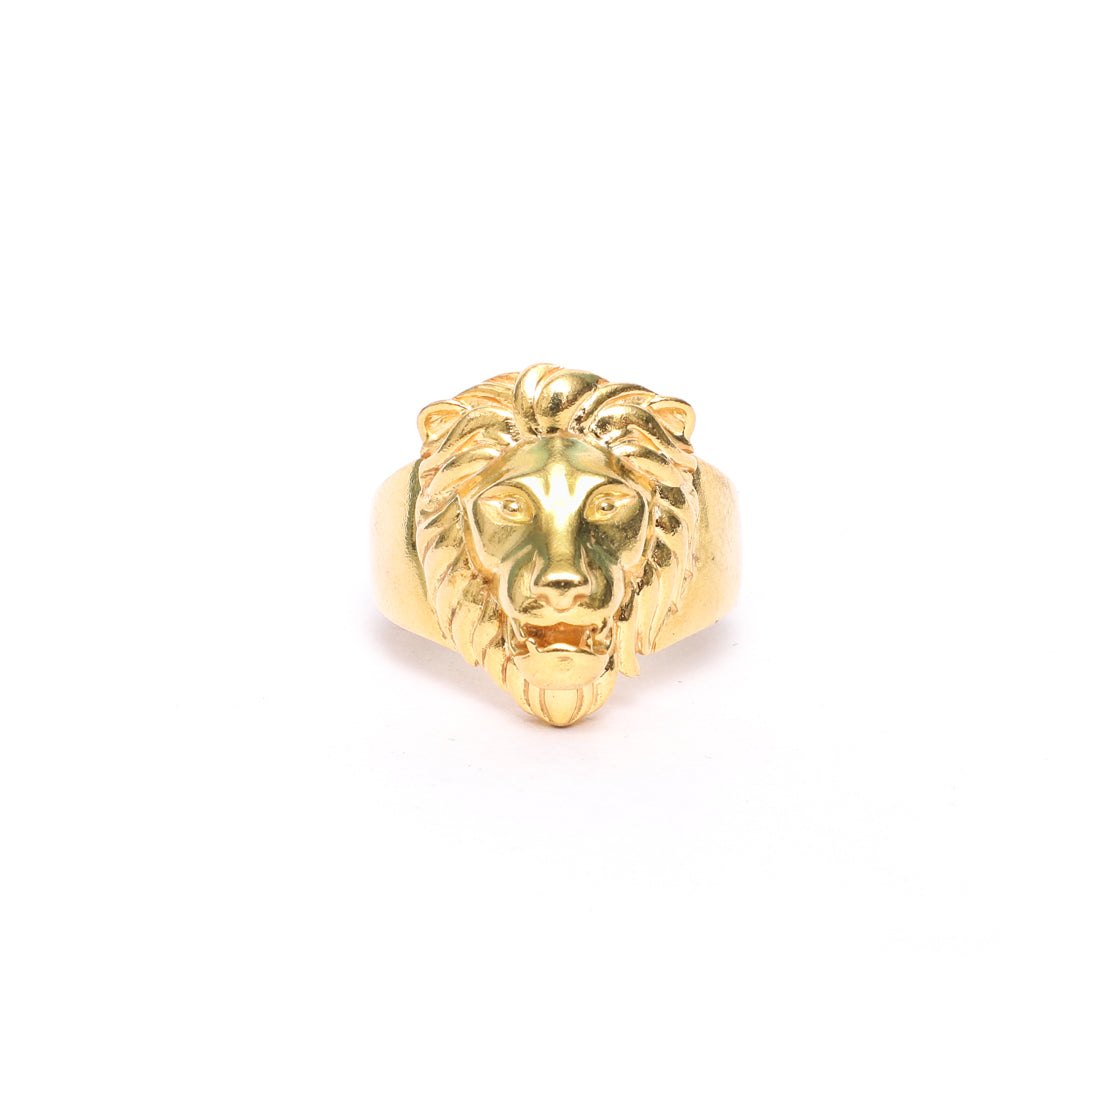 1 GRAM GOLD LION FACE RING FOR MEN DESIGN A-614 – Radhe Imitation